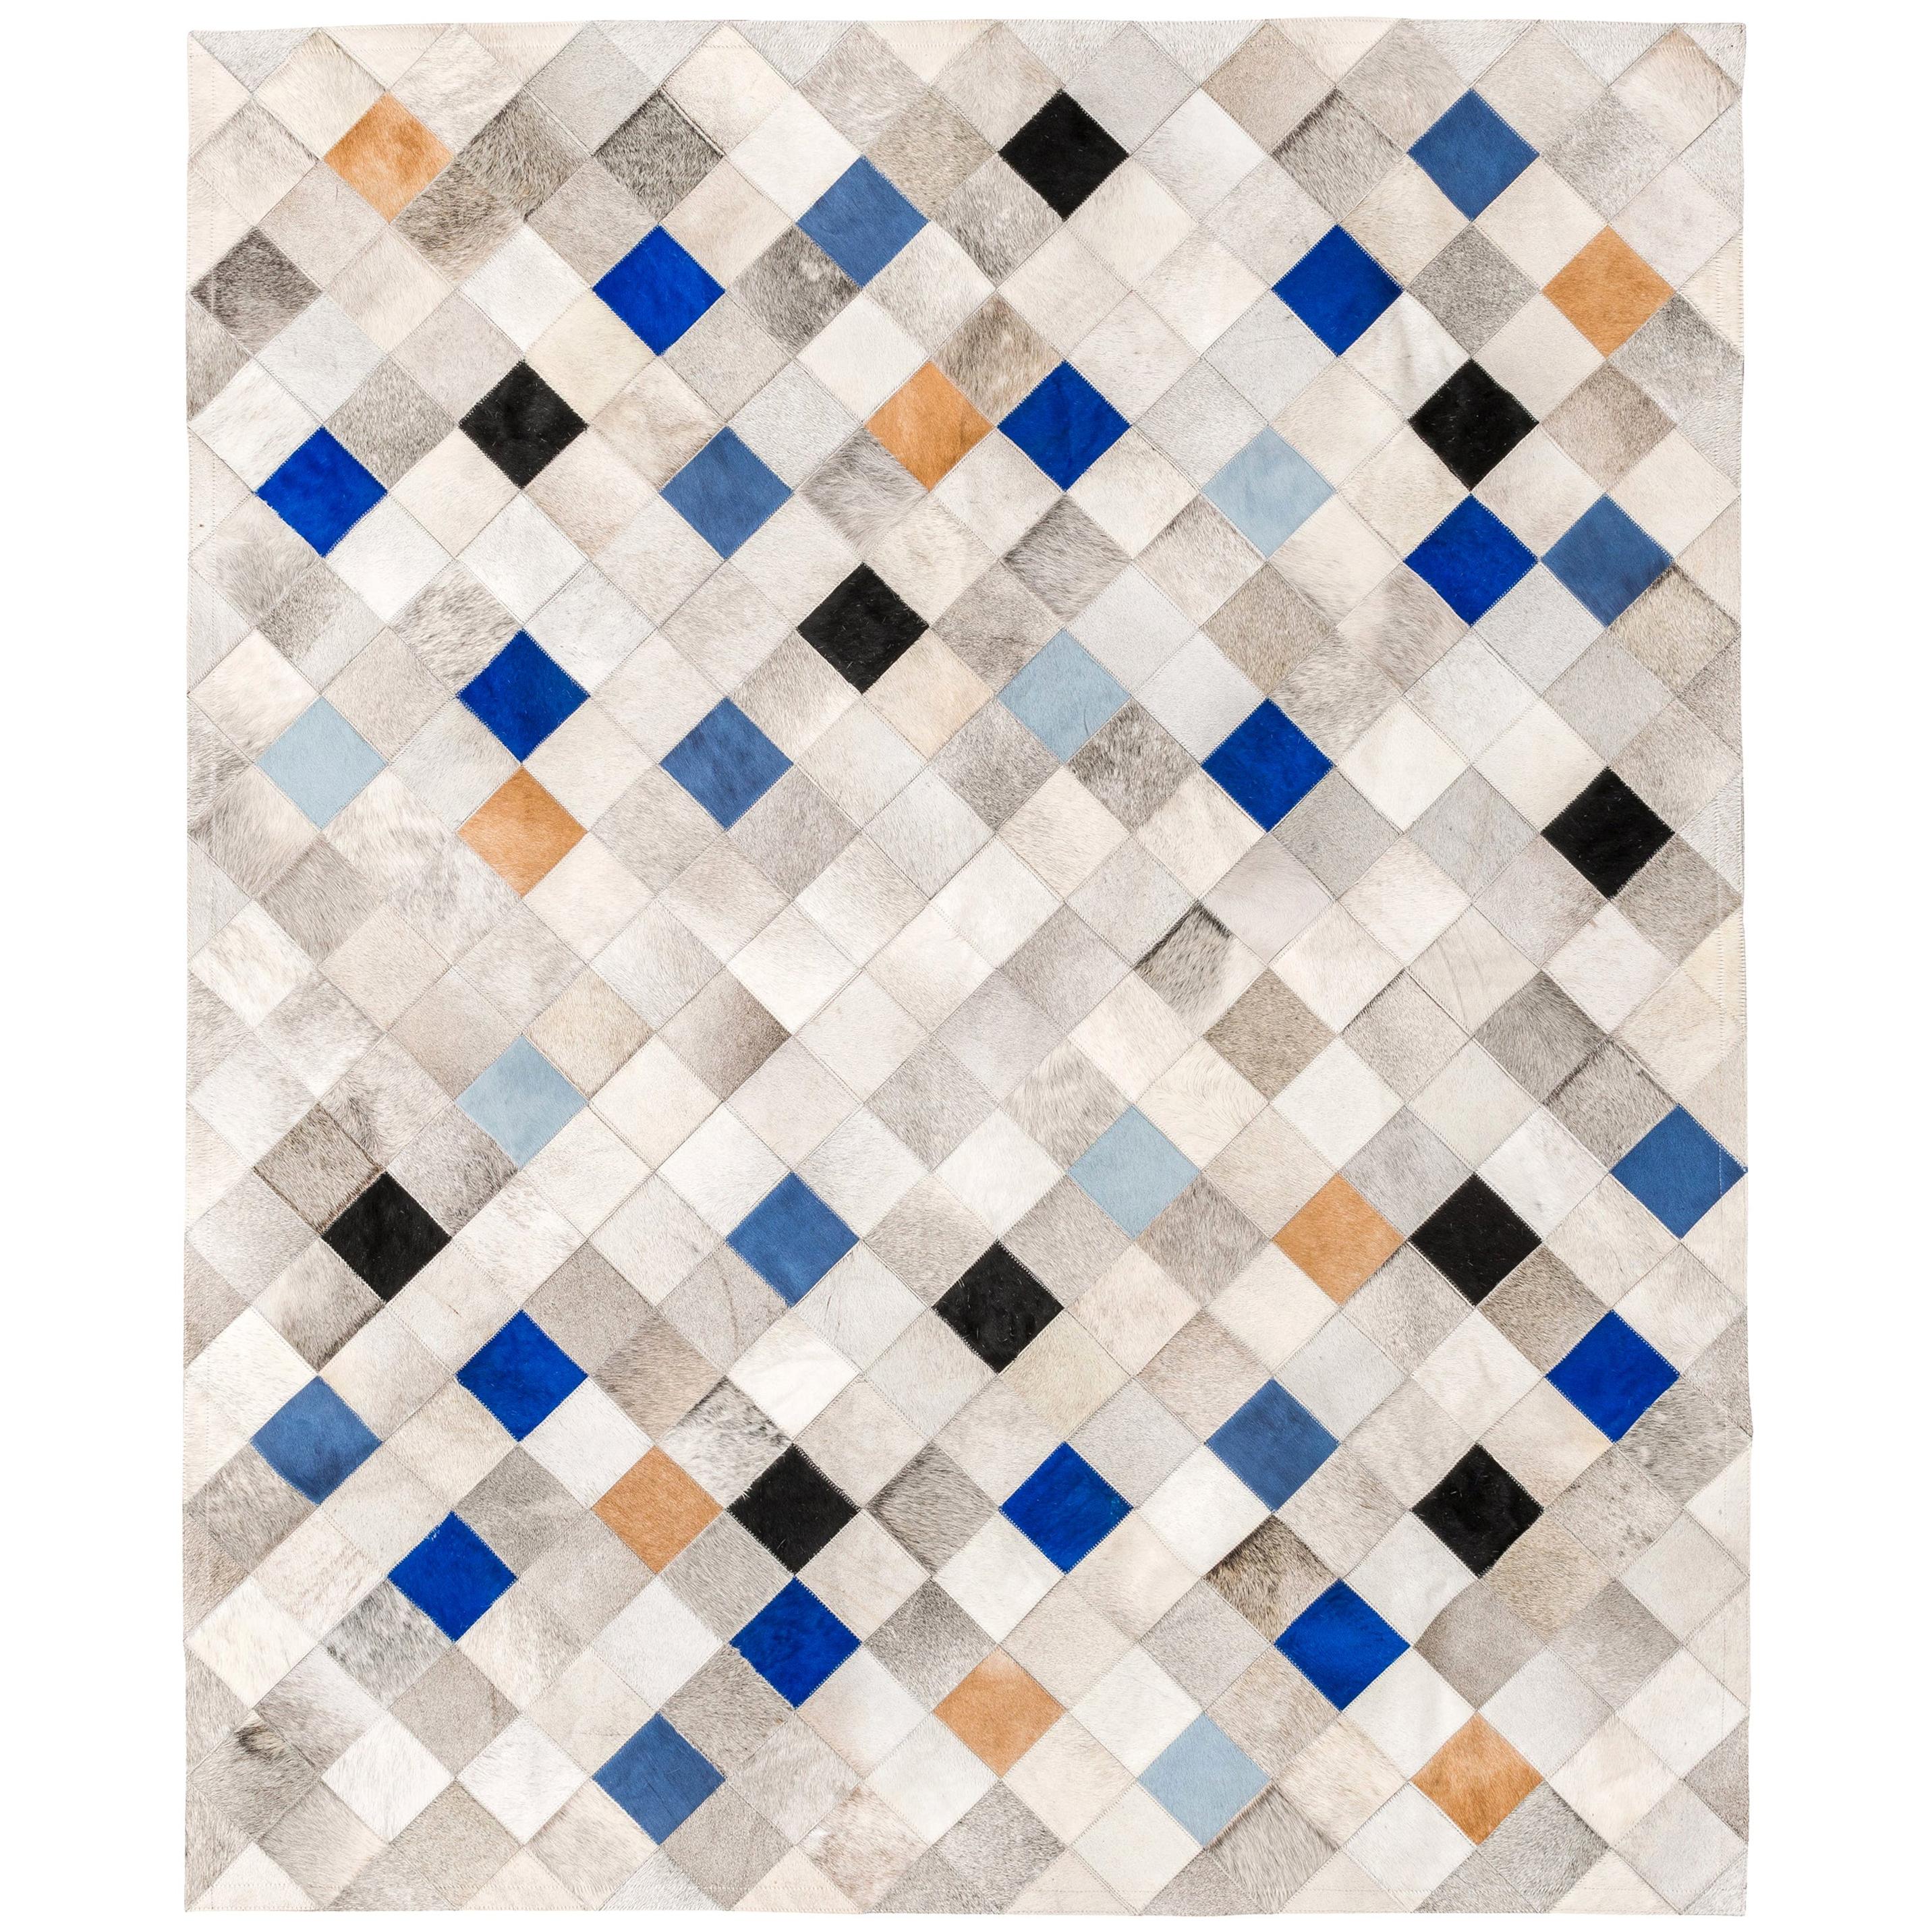 Cowhide-Bodenteppich in Grau, Blau und Karamell mit fallenden Quadraten X-Grau